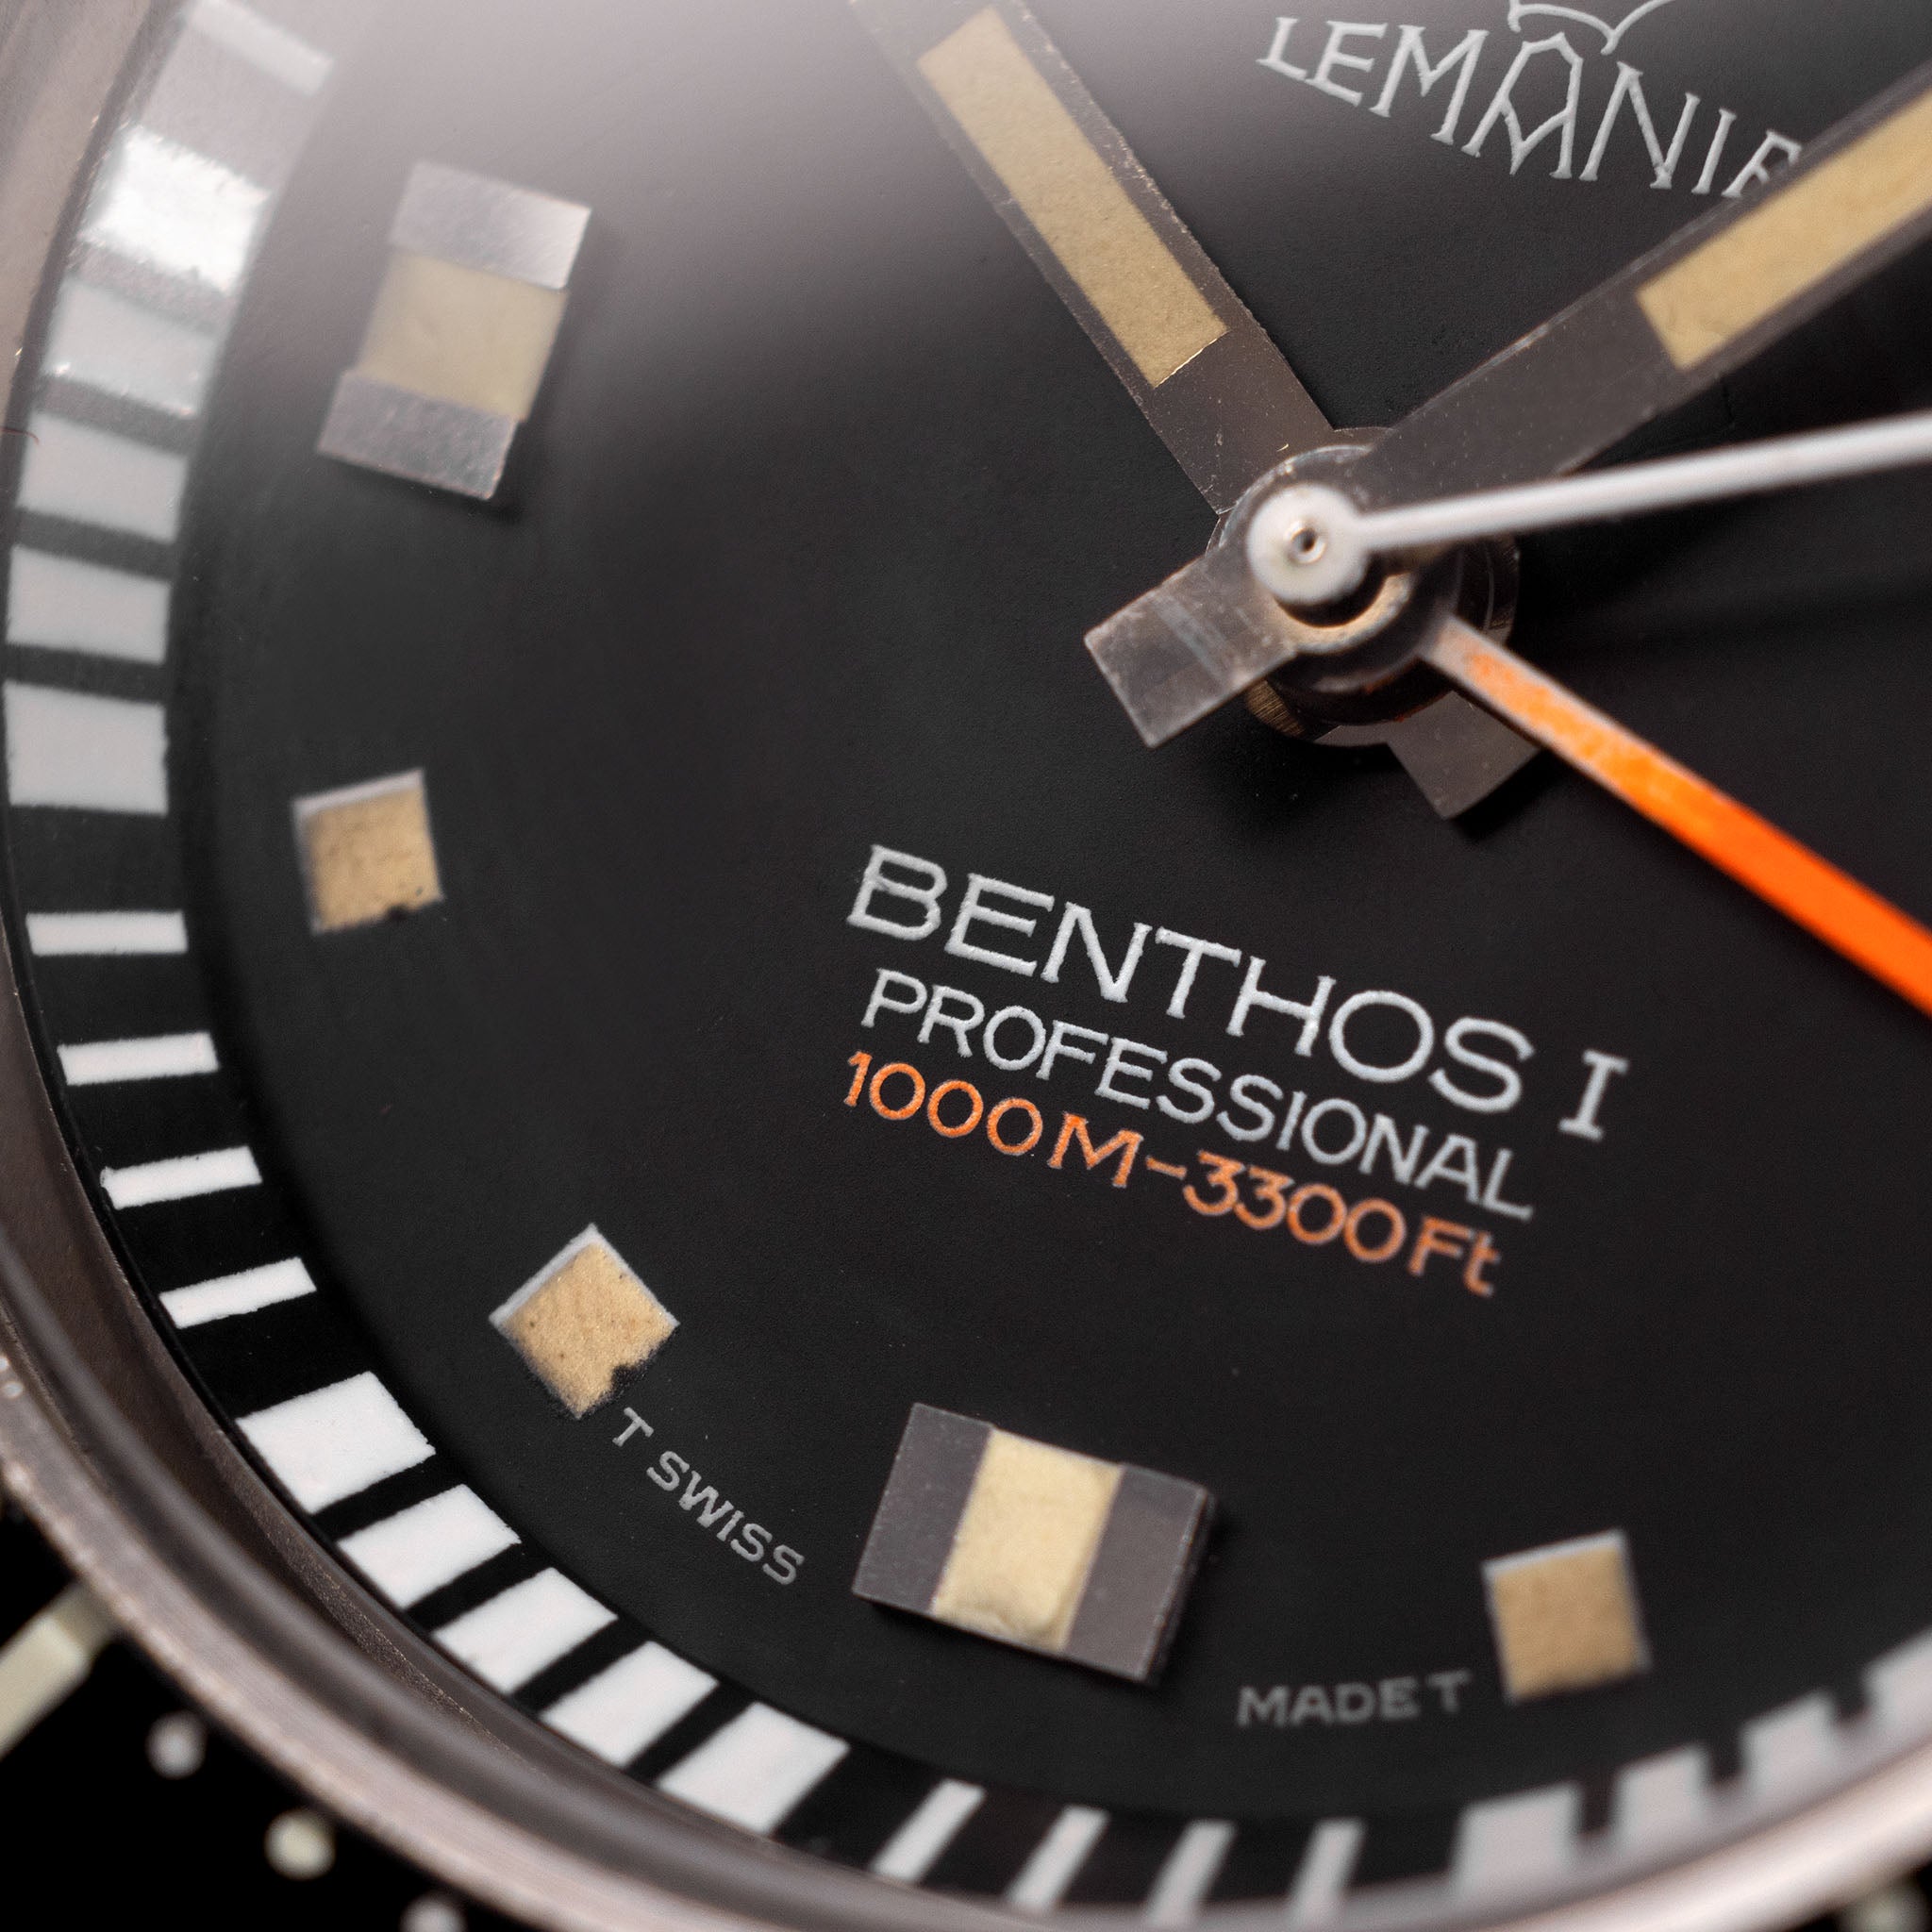 Lemania Benthos 1 "1000 Meters" Dive Watch